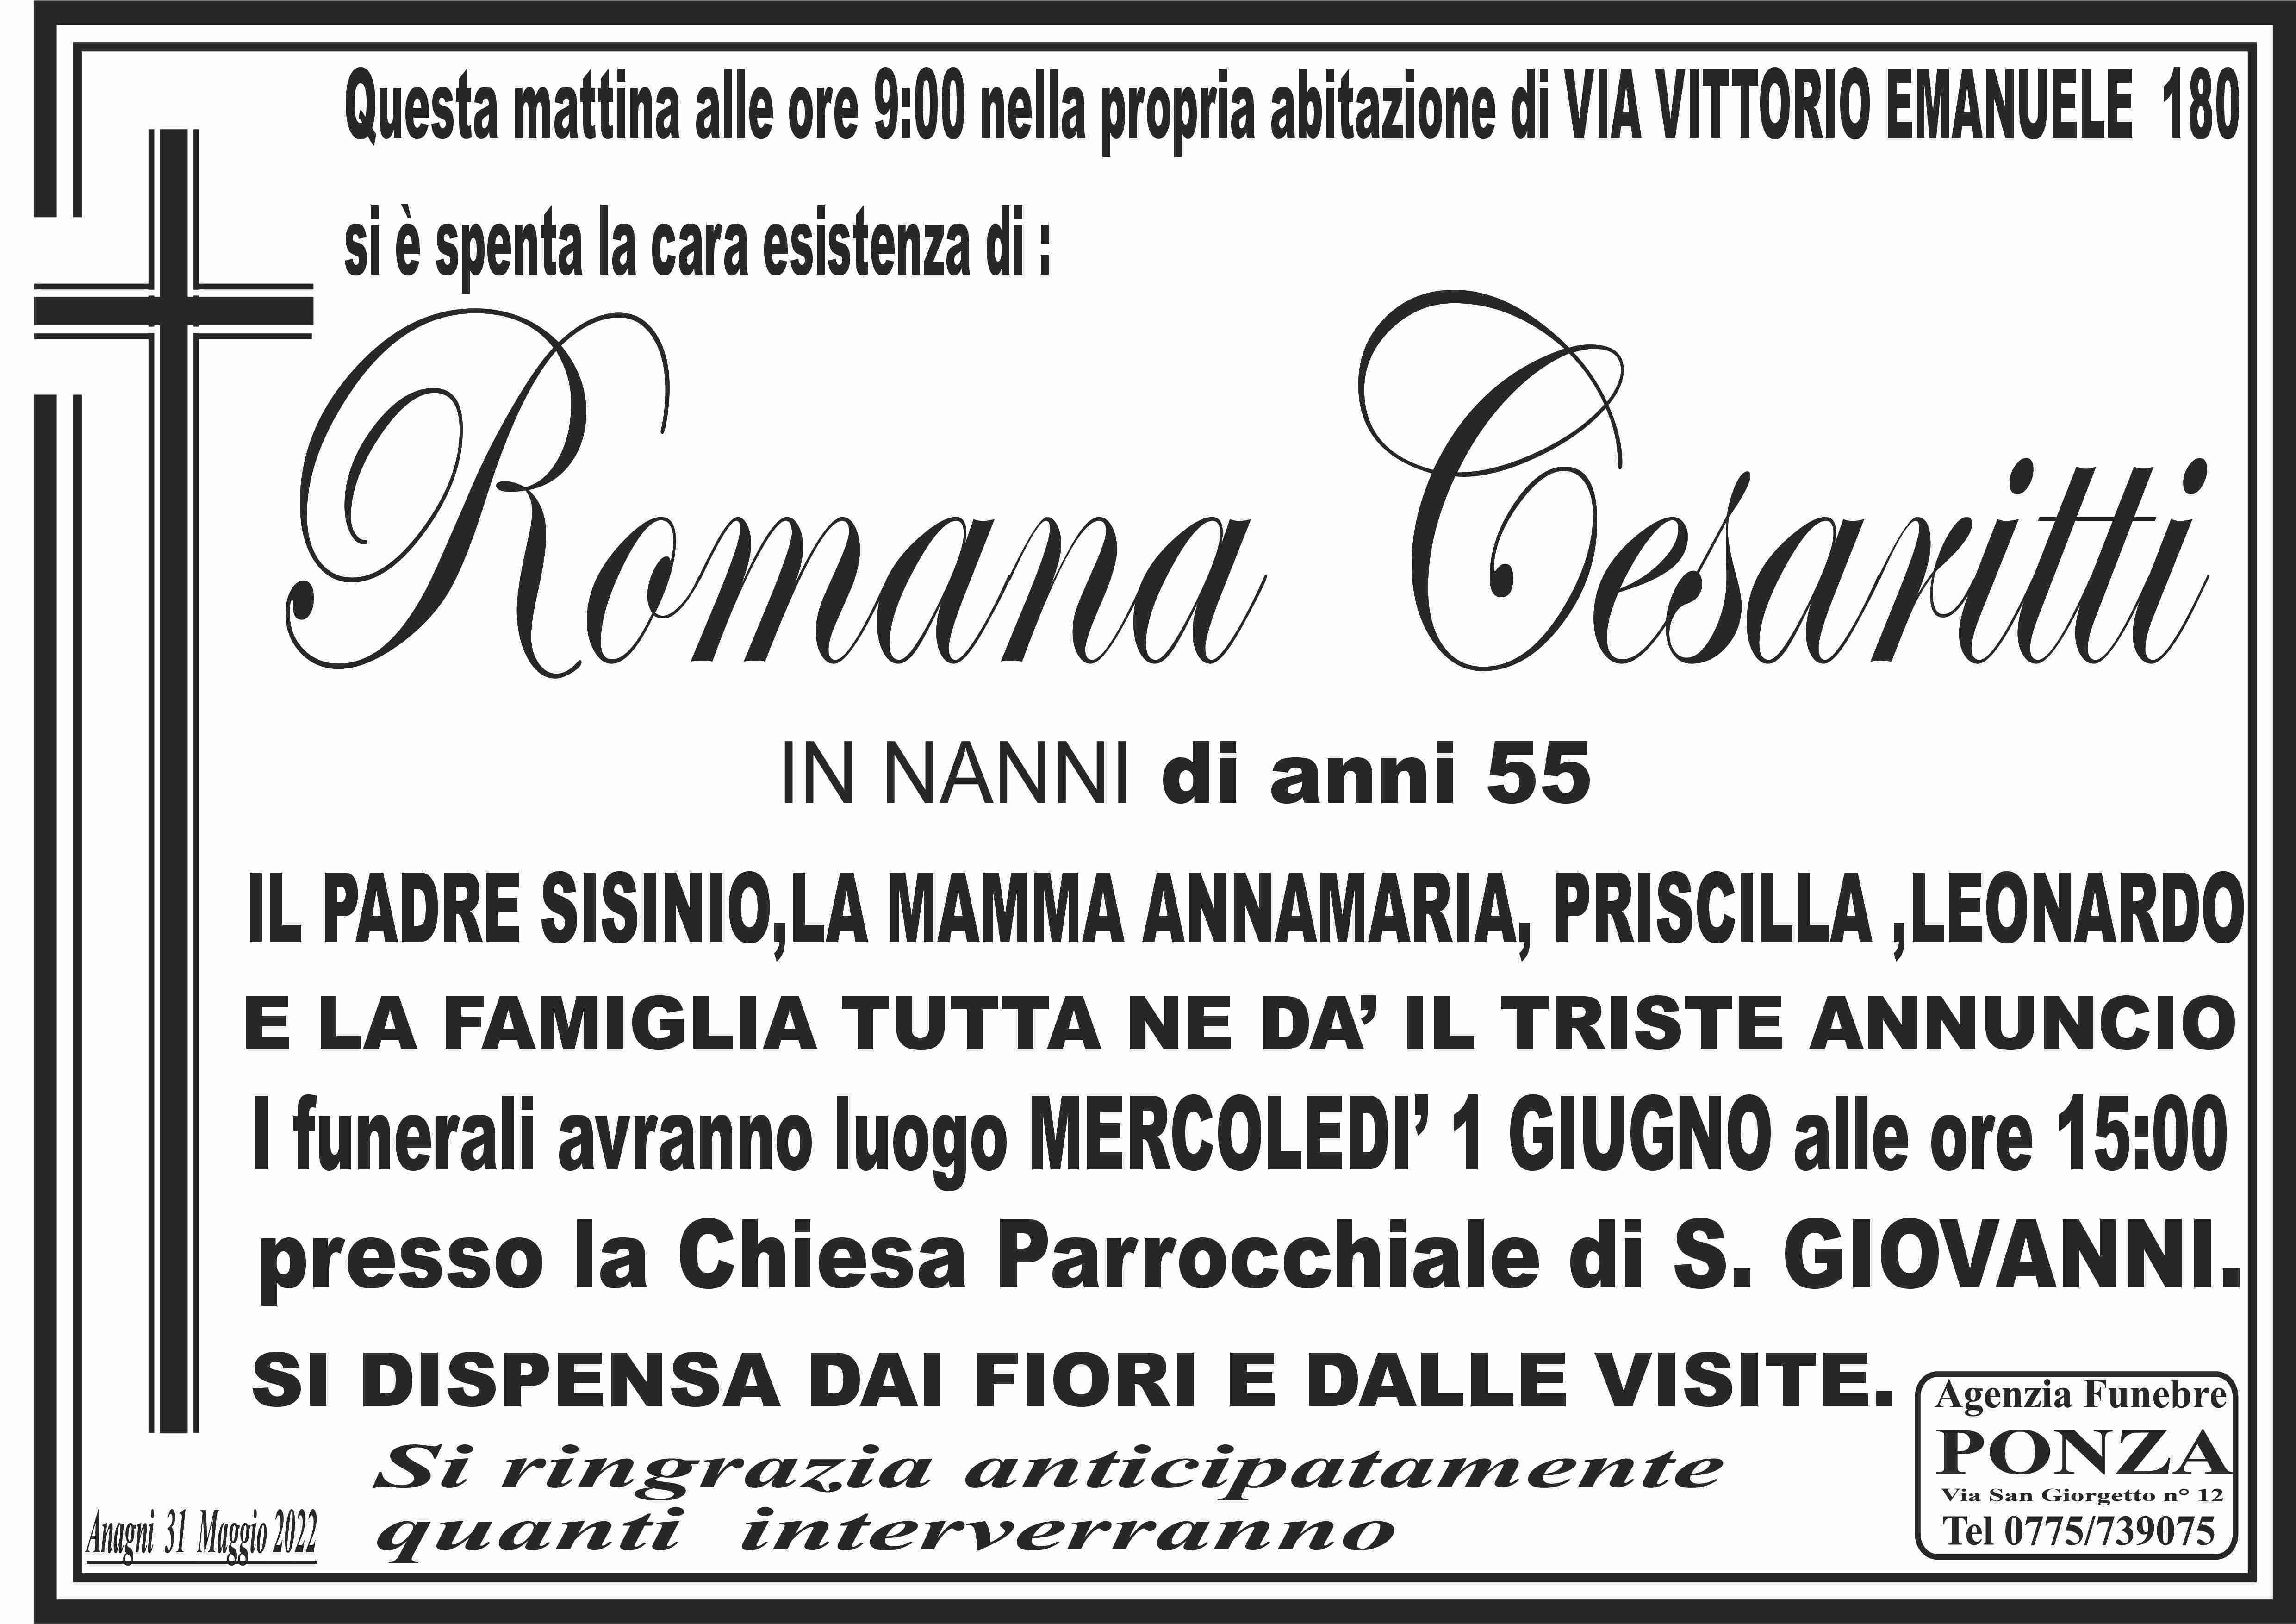 Romana Cesaritti